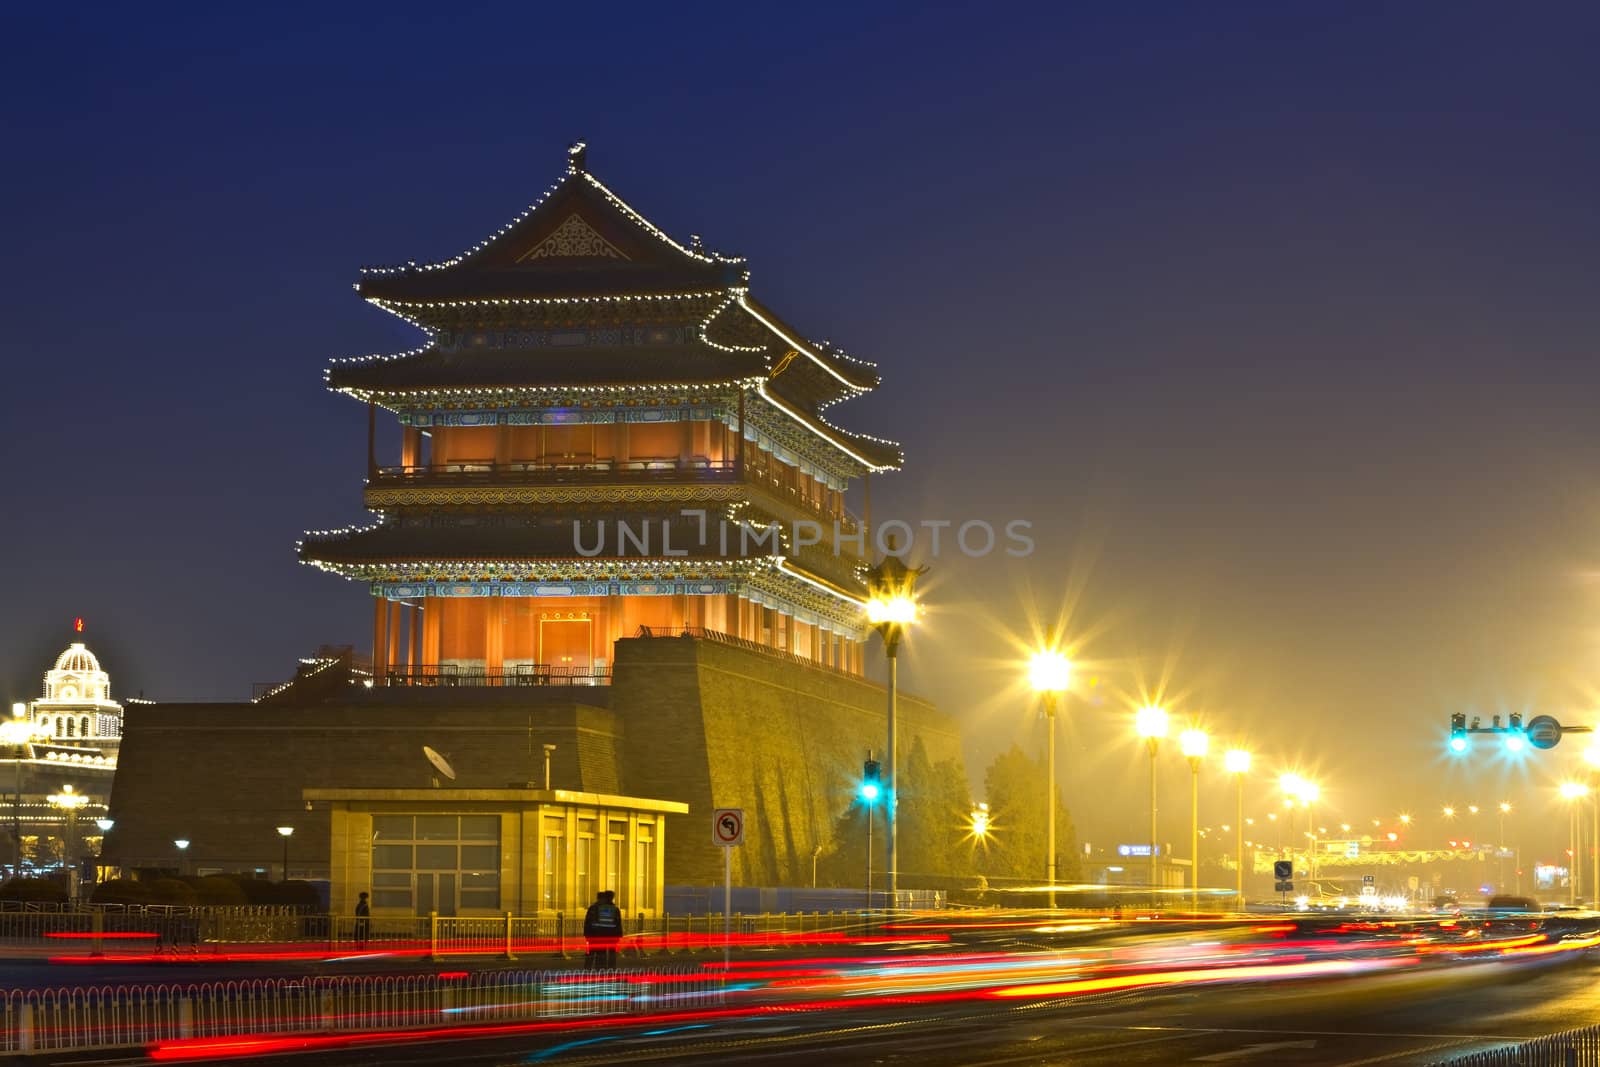 Night scene of ancient tower, qianmen, forbidden city